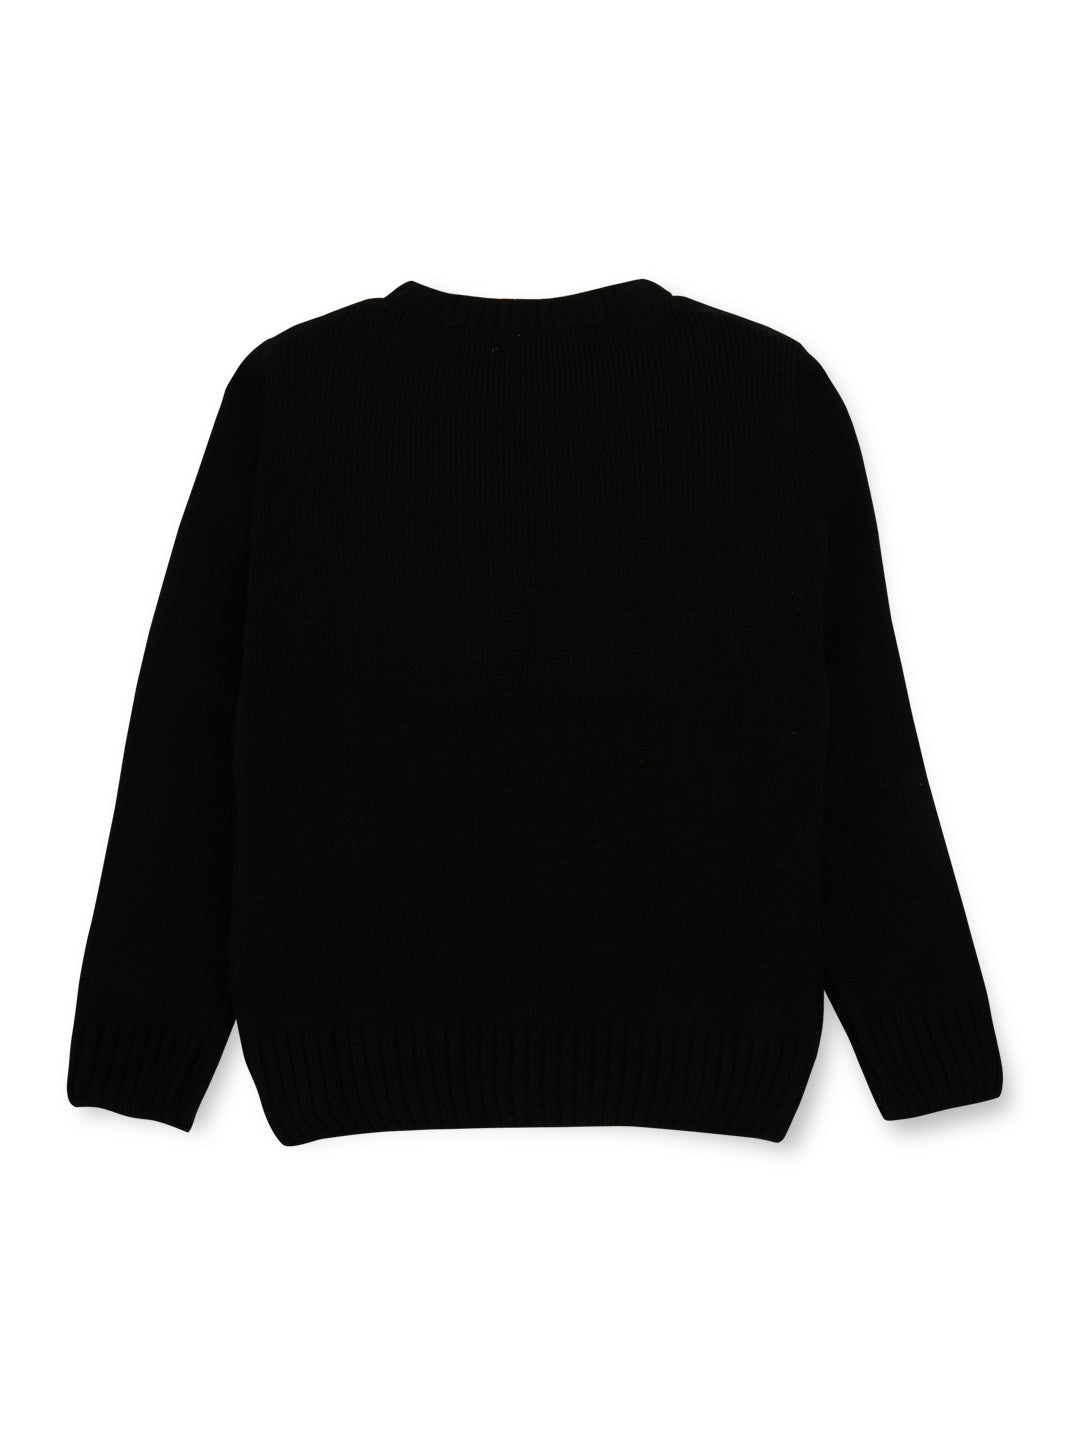 Girls Black Printed Cotton Full Sleeves Sweater